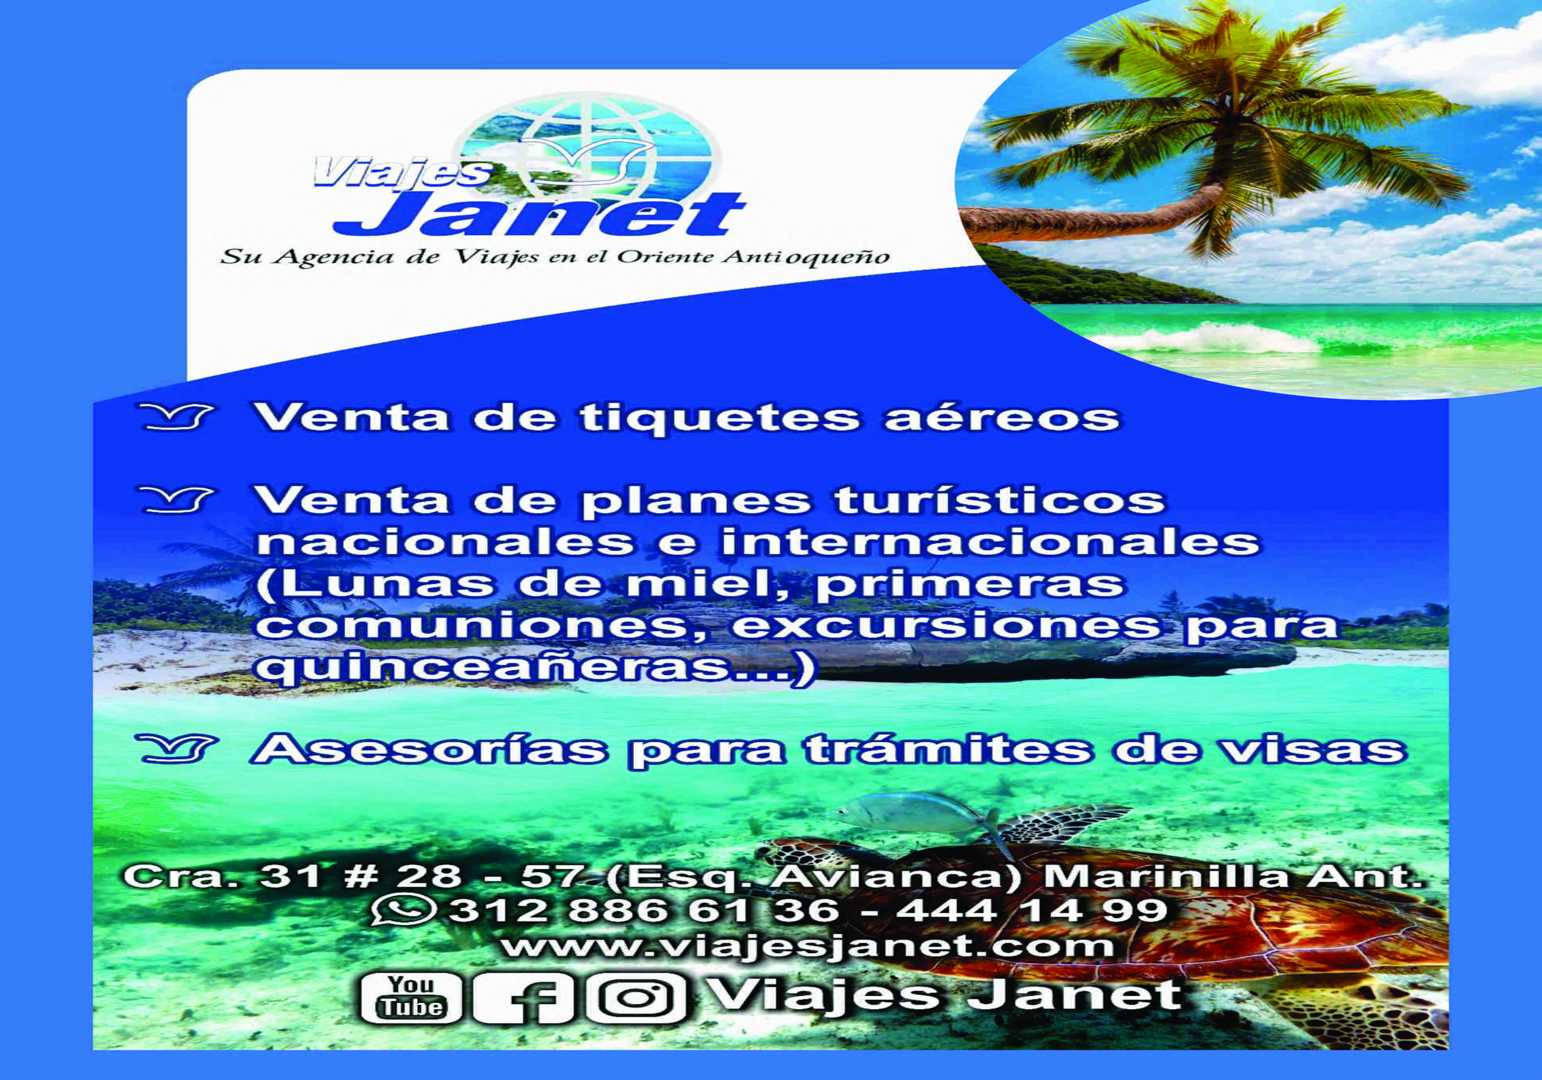 Viajes Janet - Marinilla Antioquia